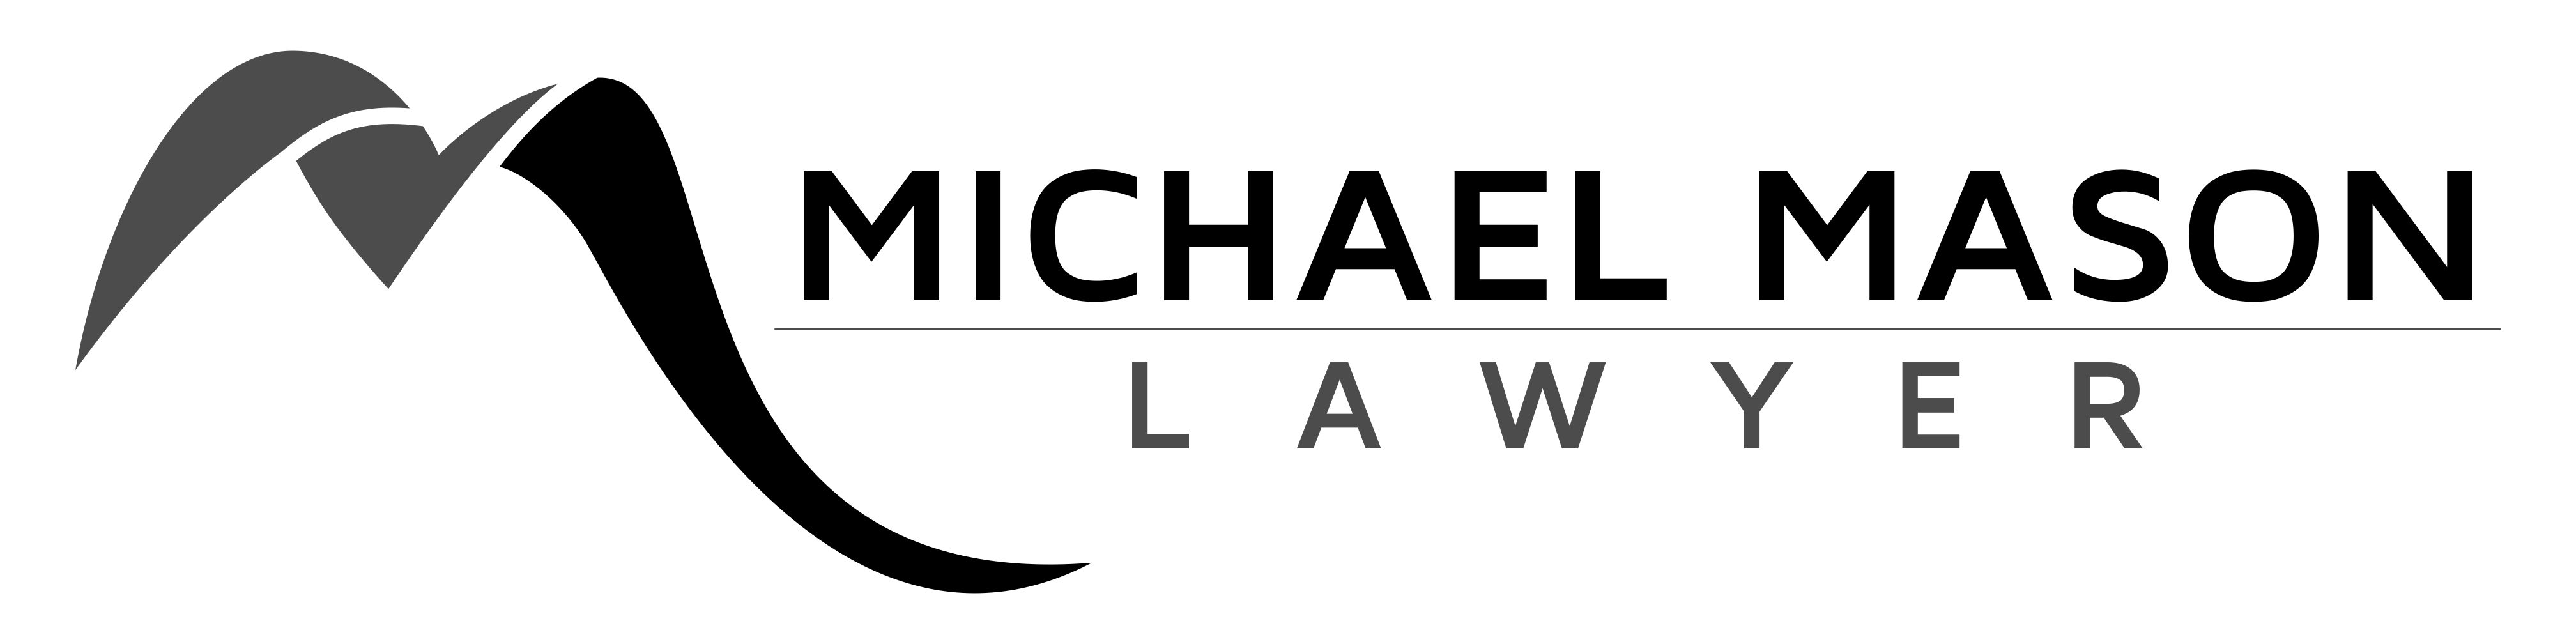 michael-mason-lawyer-logo